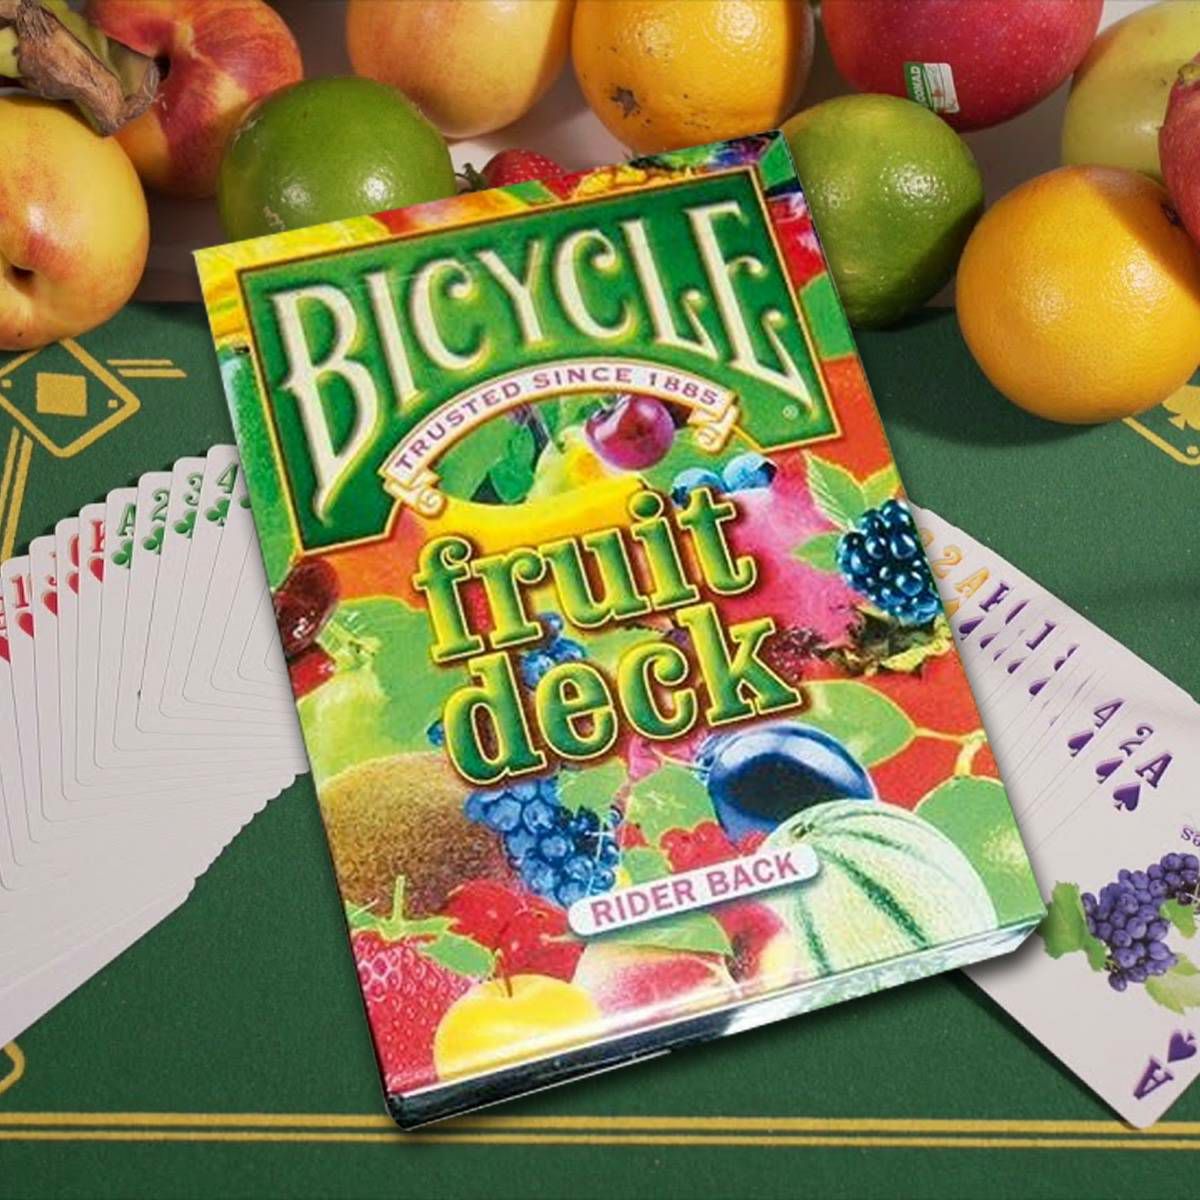 Bicycle Fruit